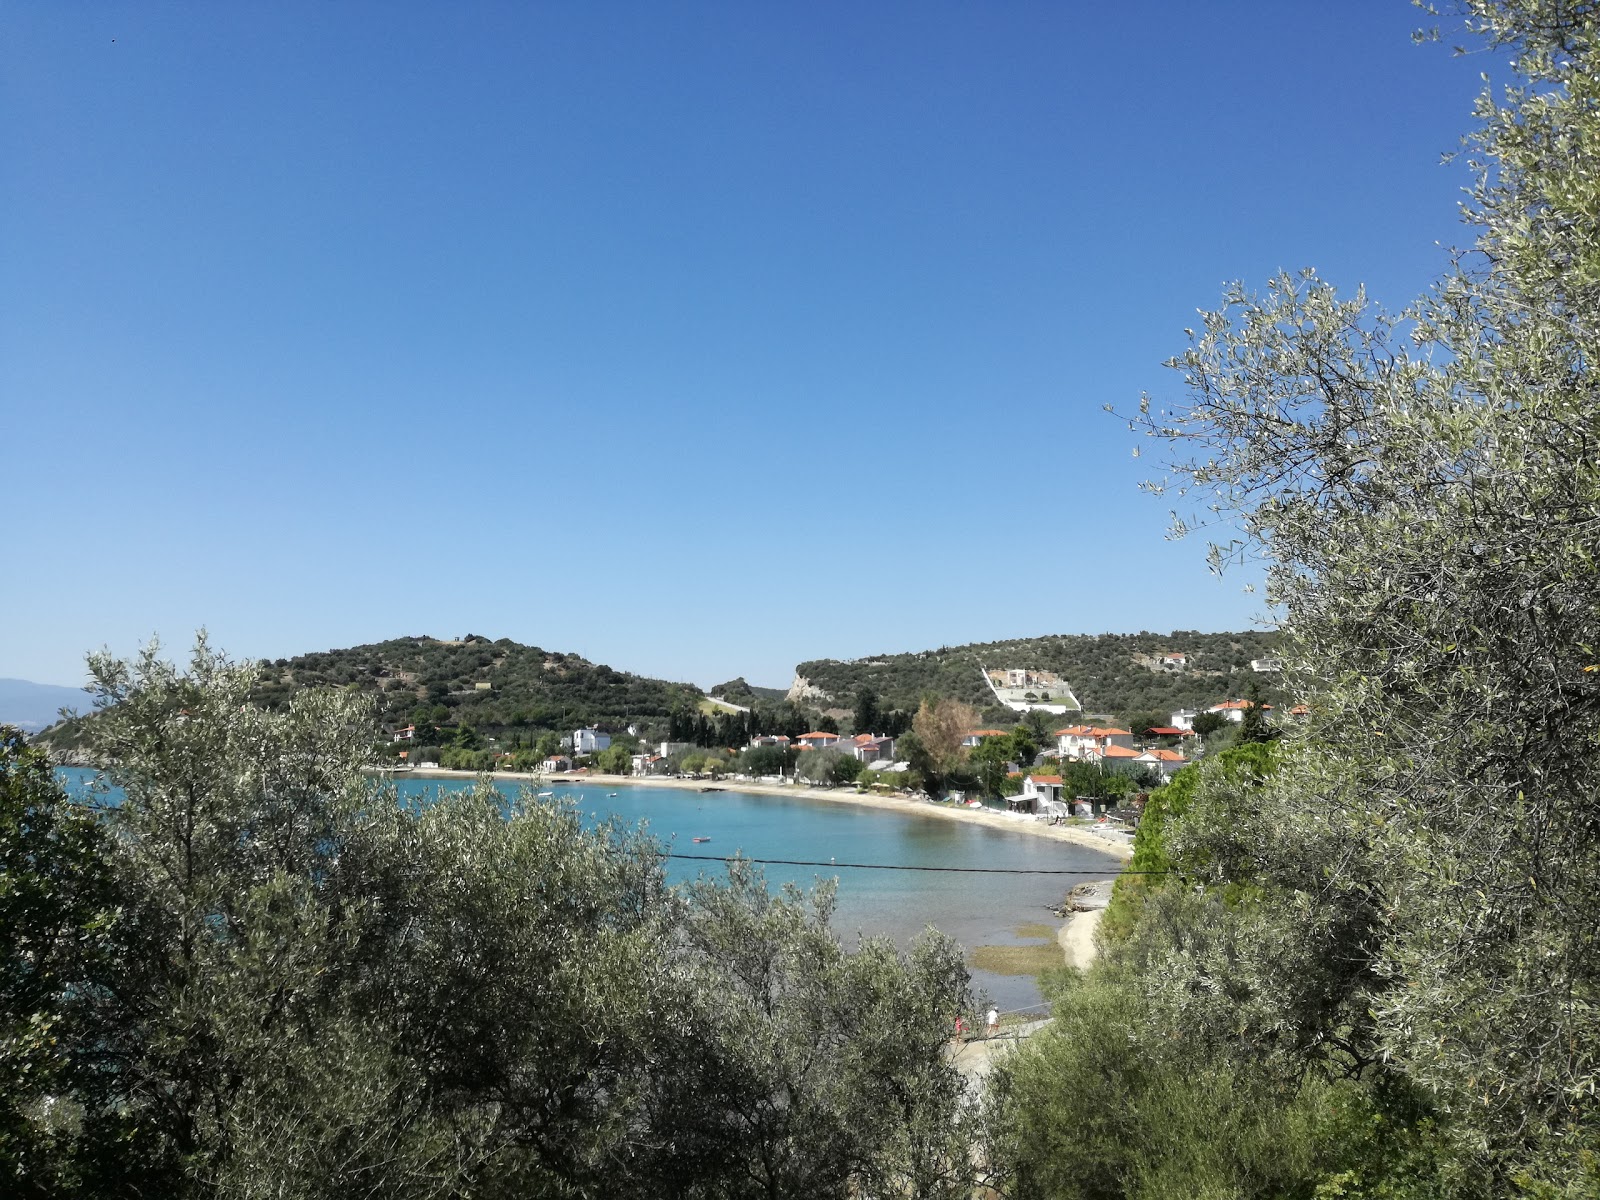 Foto af Agia Kyriaki beach faciliteter område